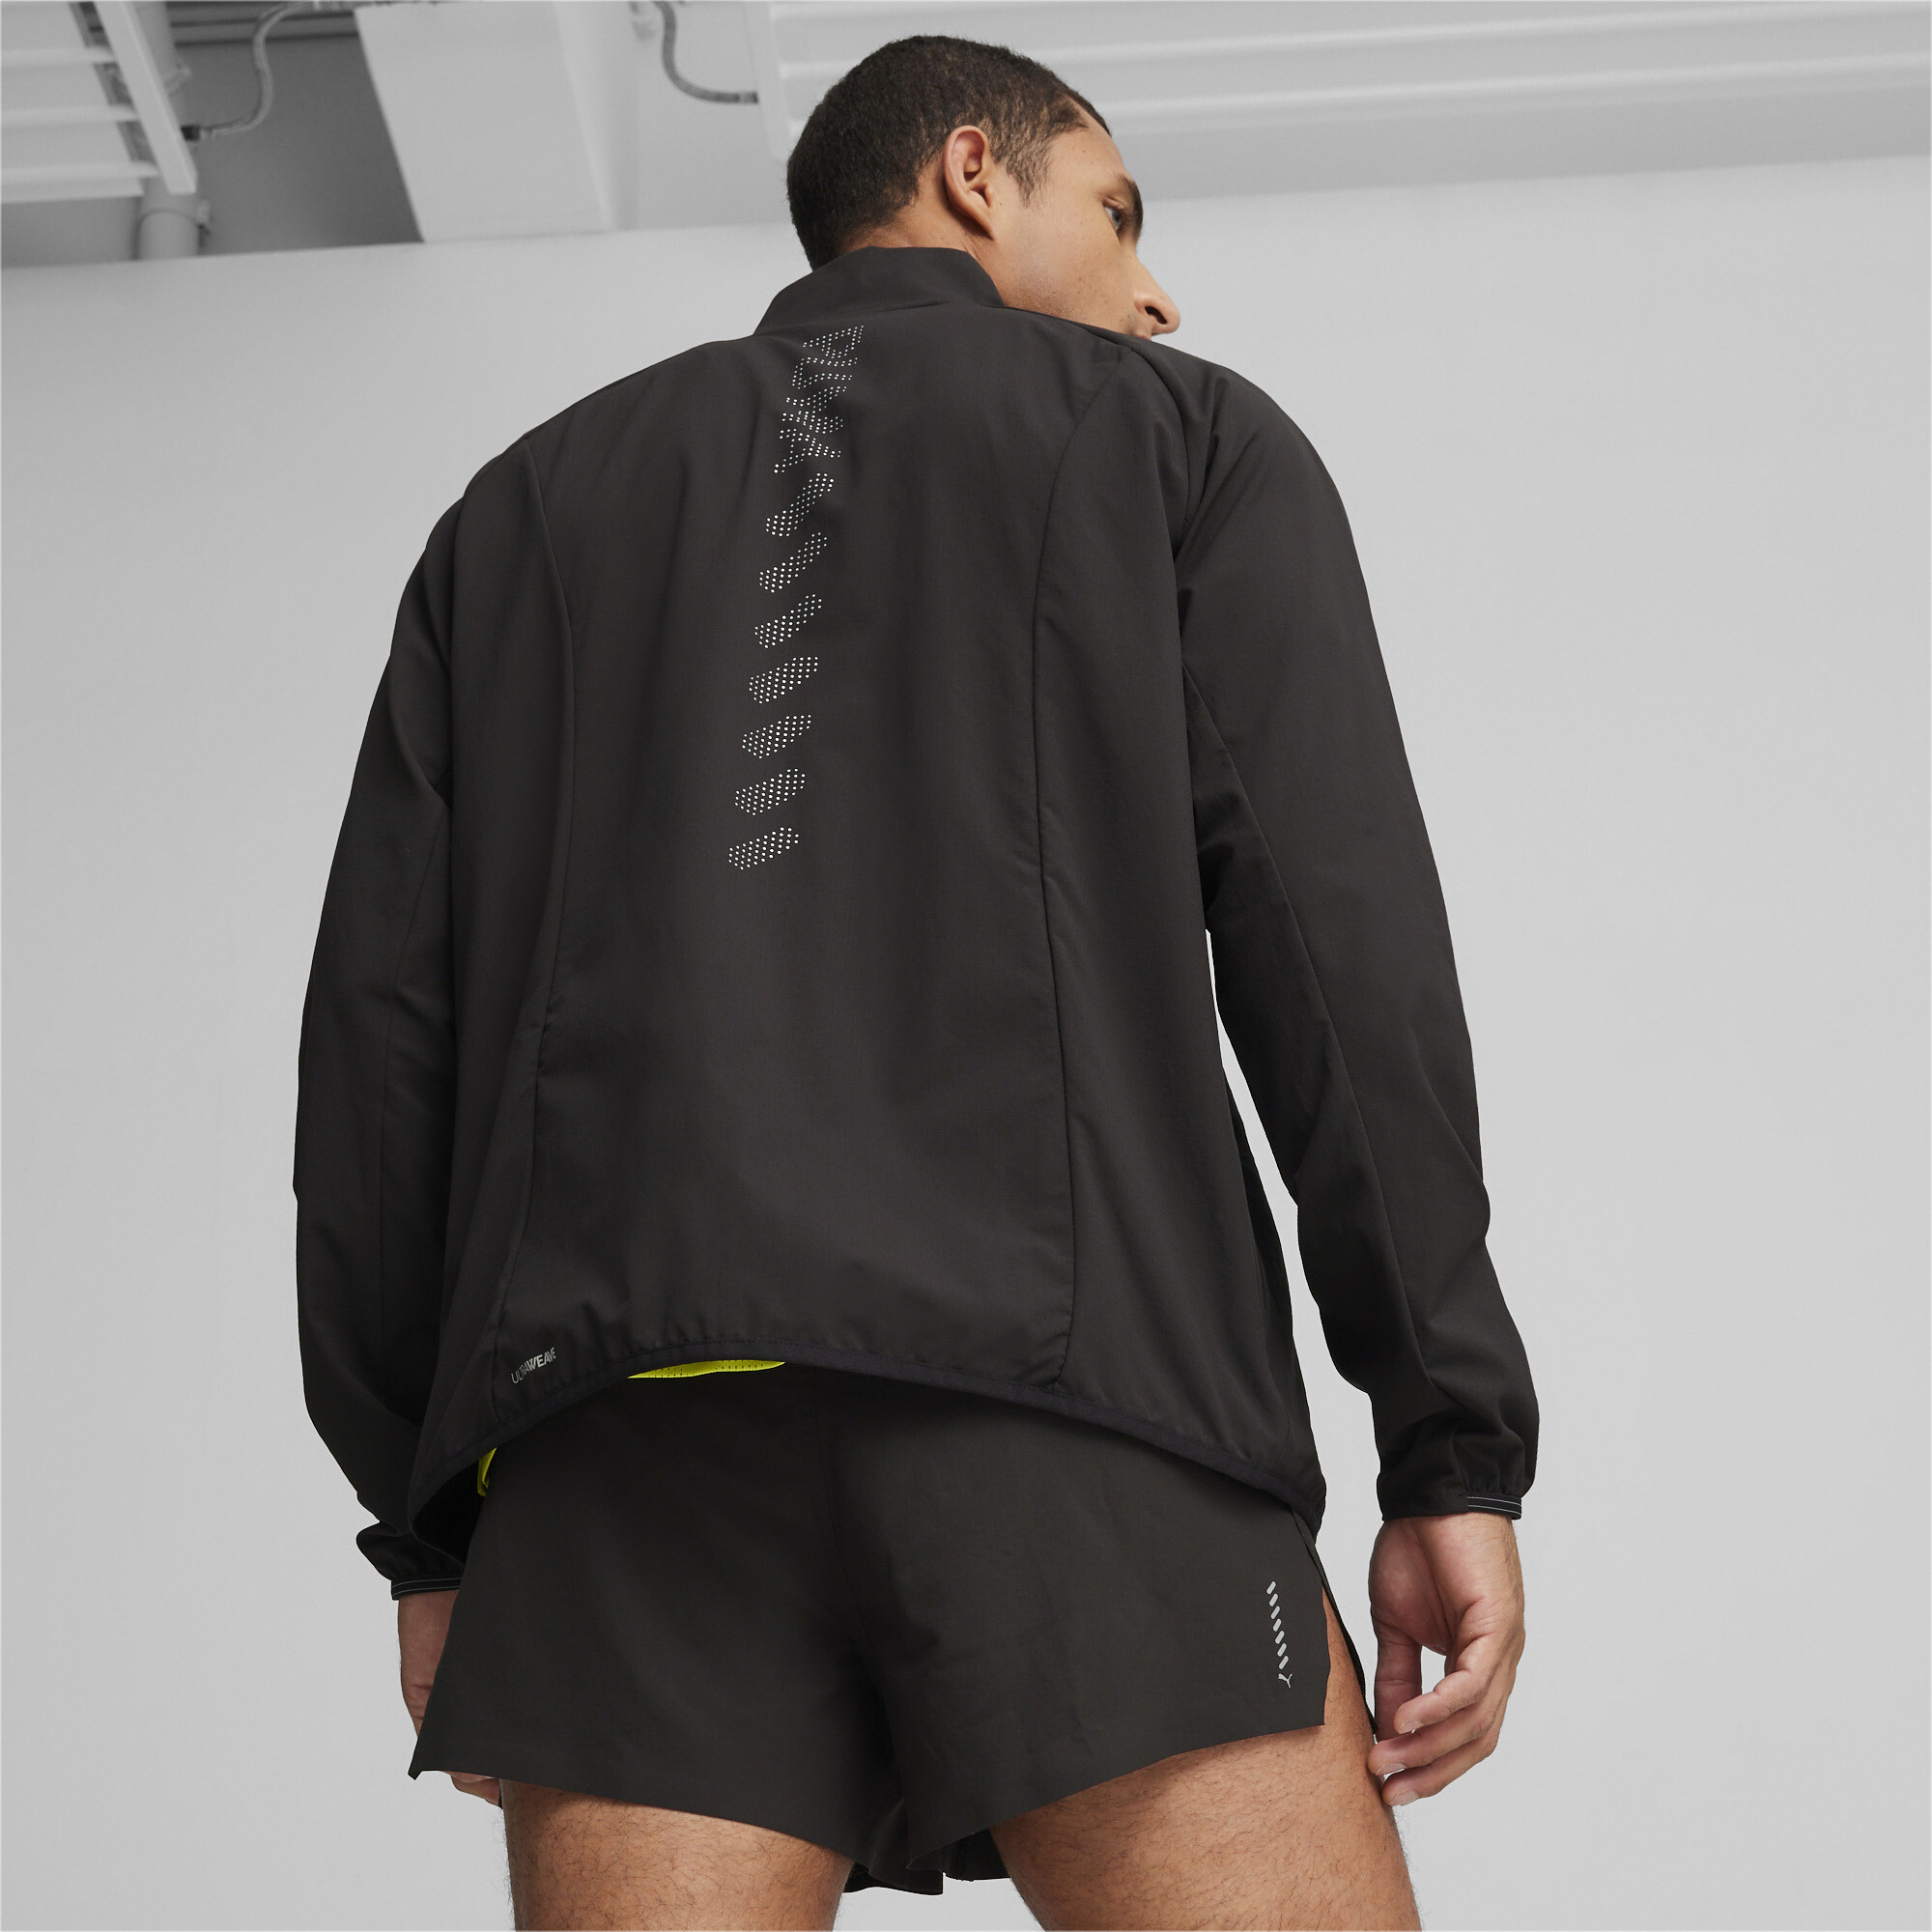 Men's PUMA RUN Elite Jacket In Black, Size XS